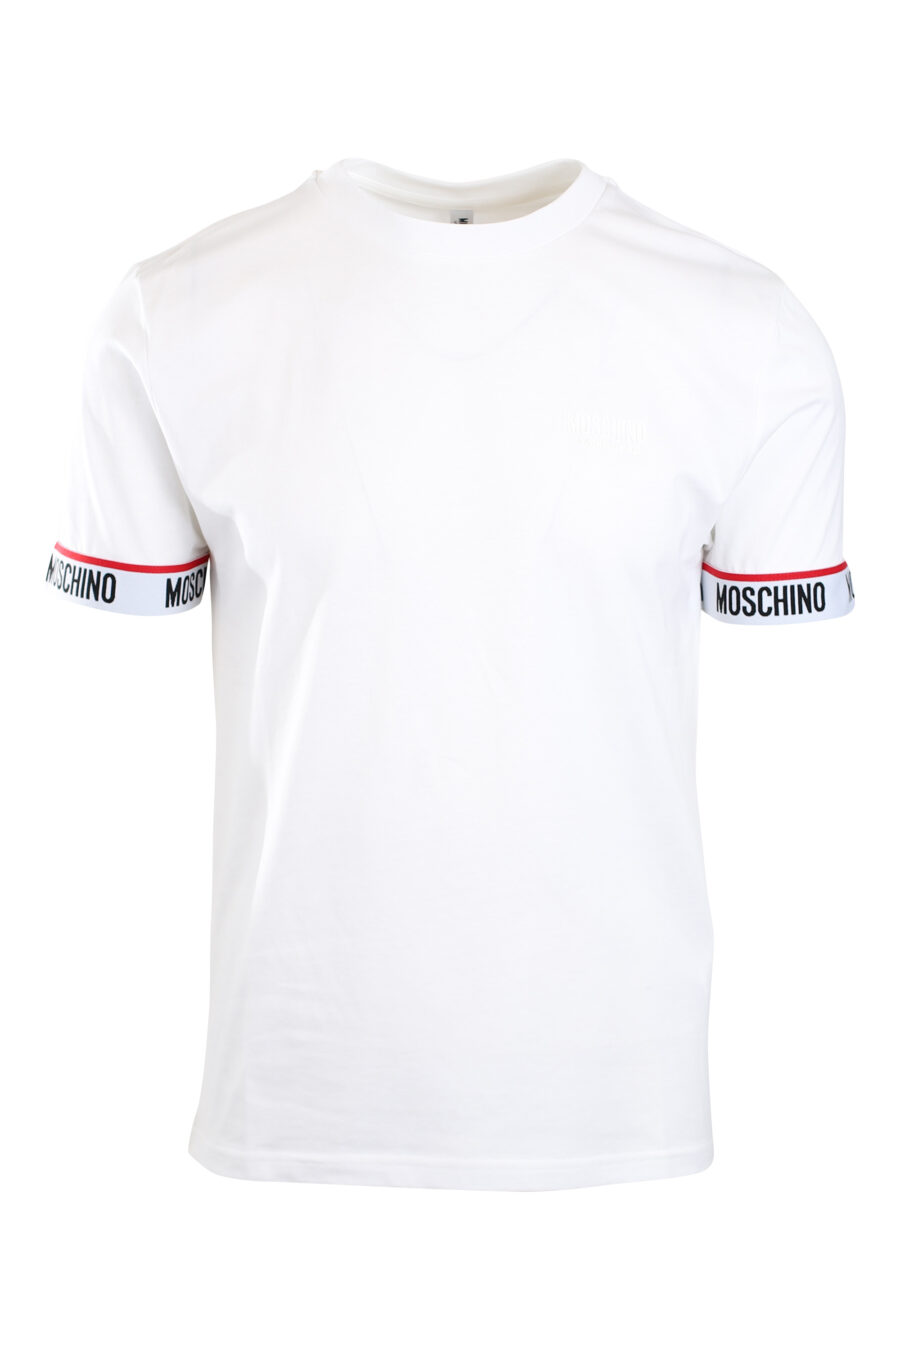 Camiseta blanca con logo en banda en mangas y minilogo monocromático - IMG 2174